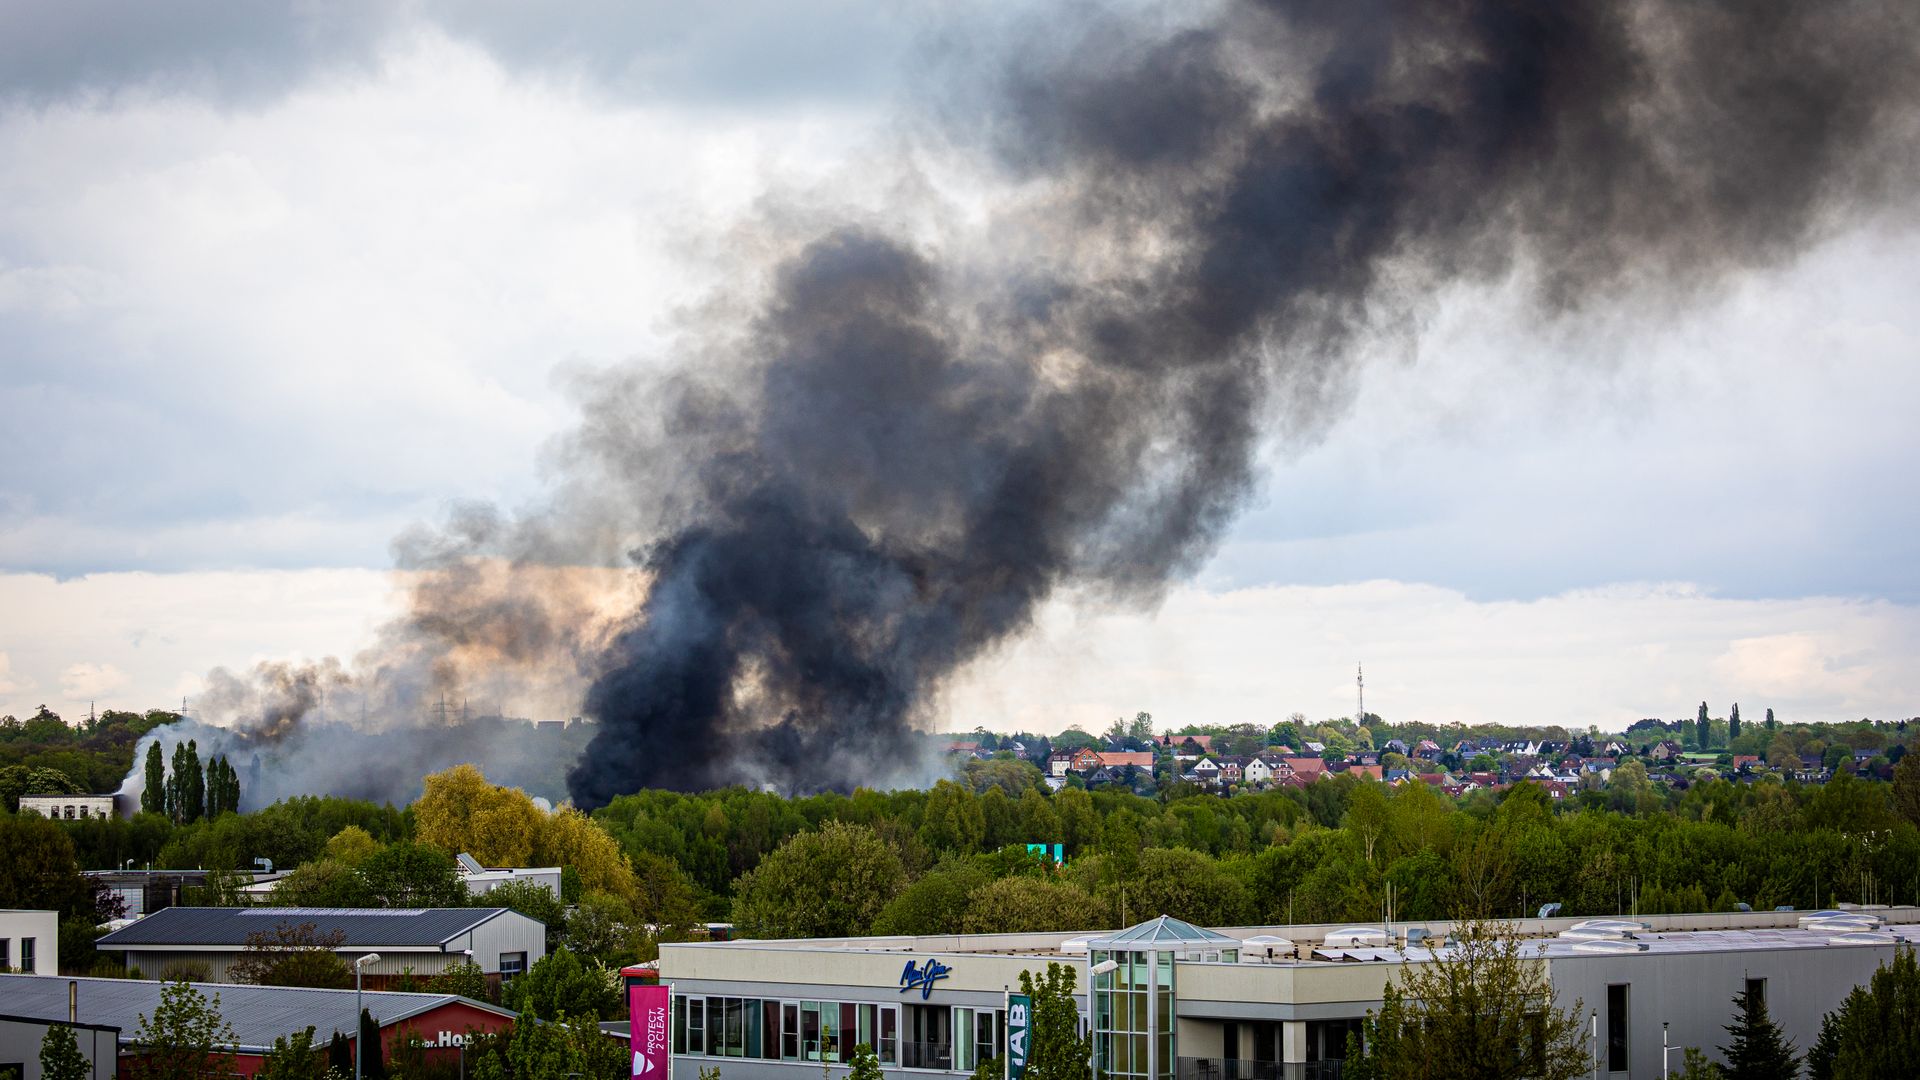 braunschweig: großbrand in industriegebiet - löscharbeiten dauern an